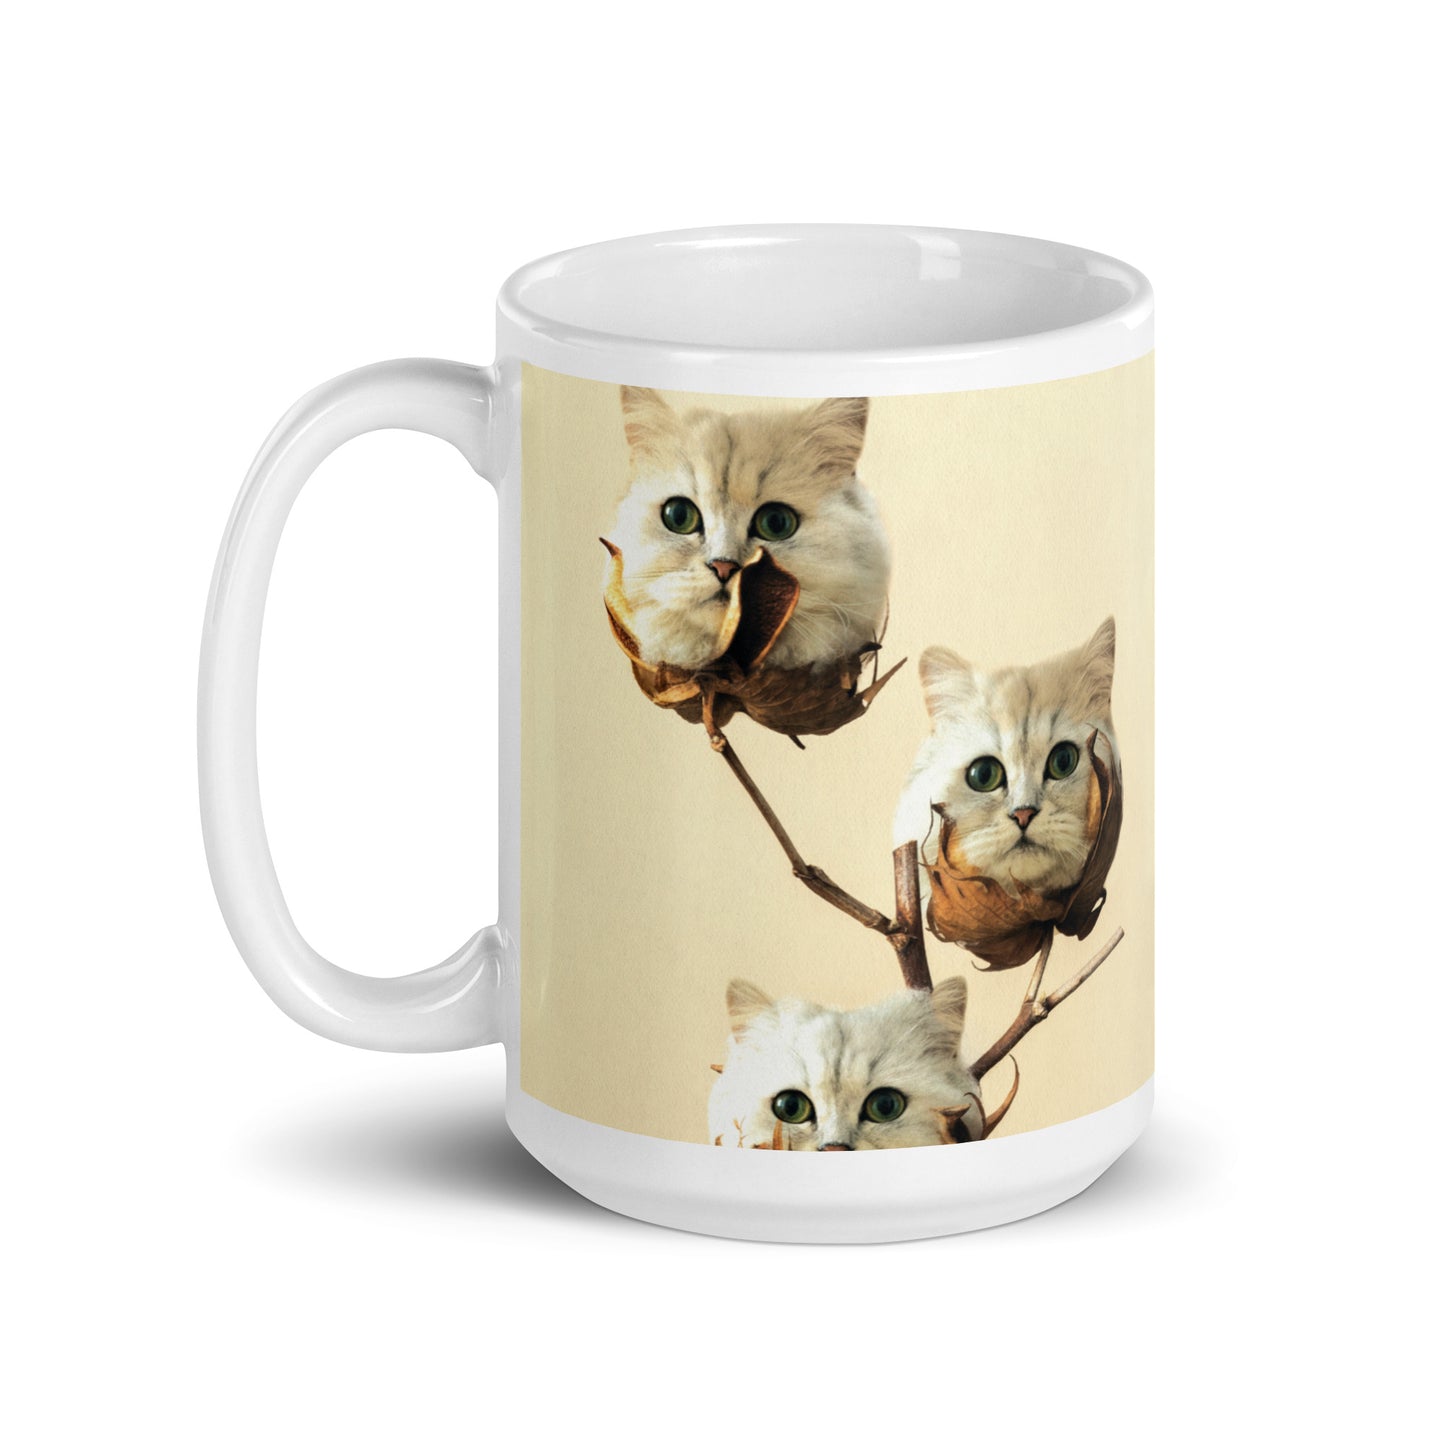 Cotton cats mug